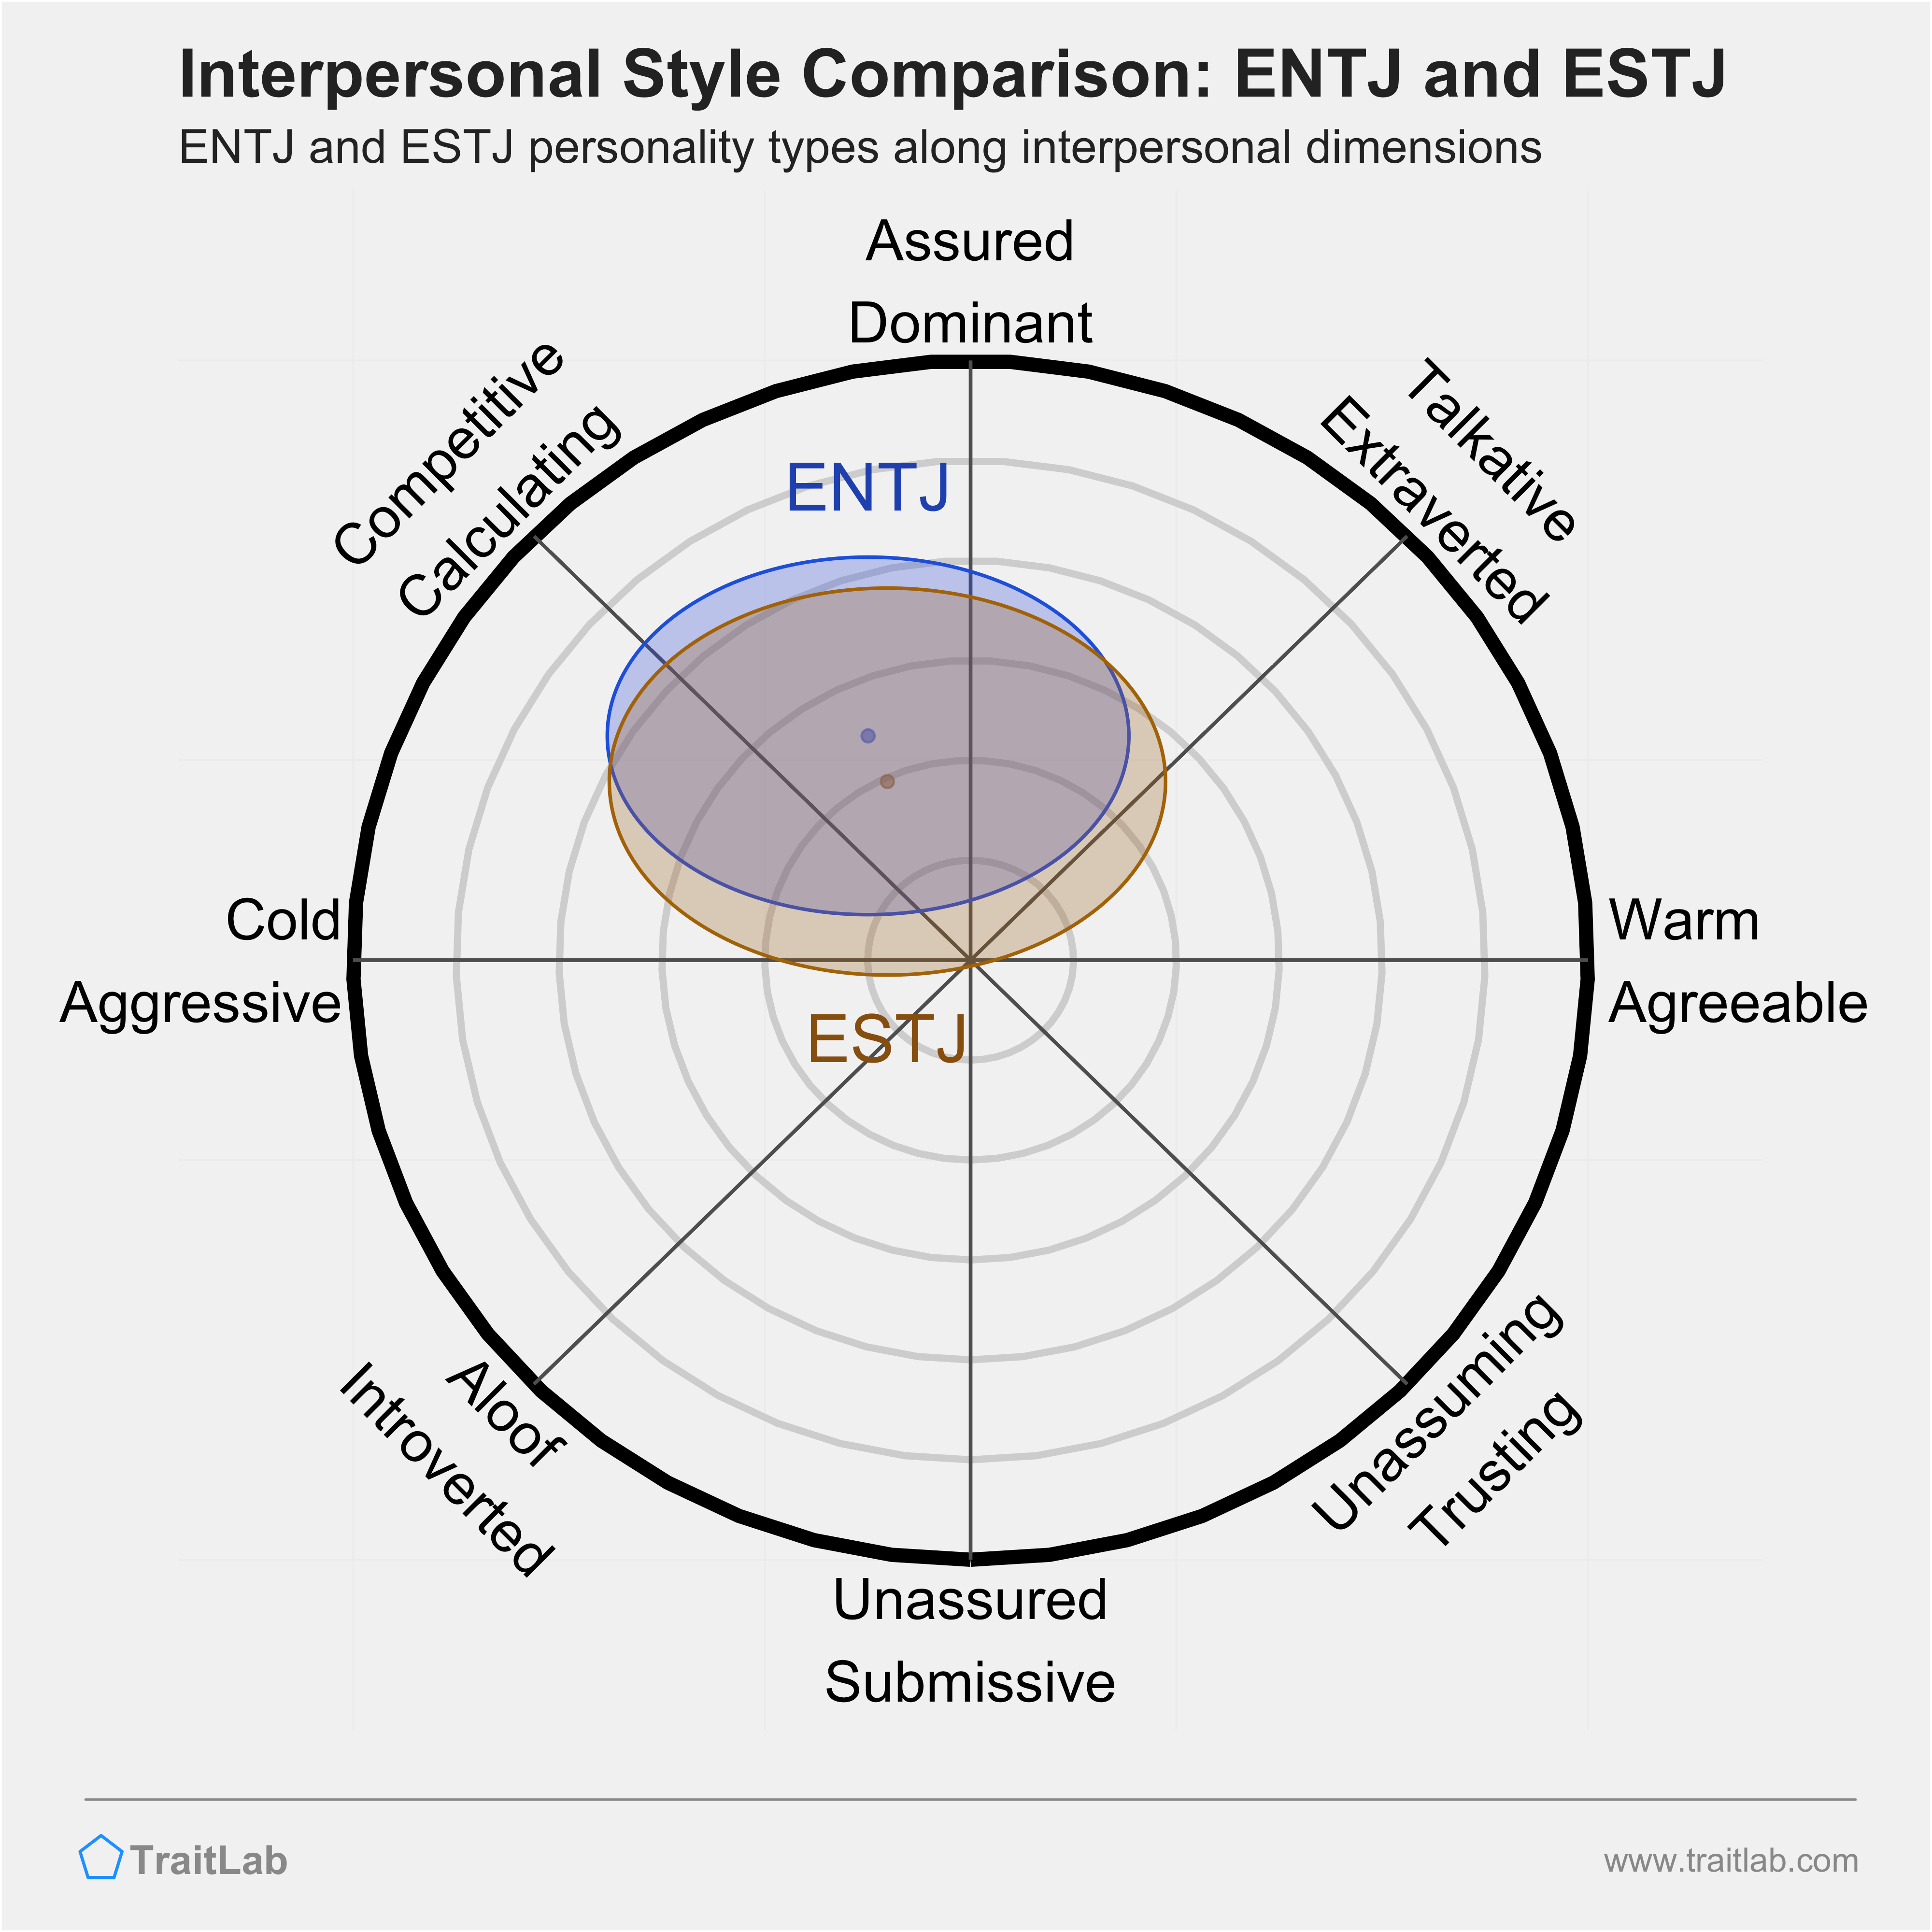 ENTJ and ESTJ comparison across interpersonal dimensions